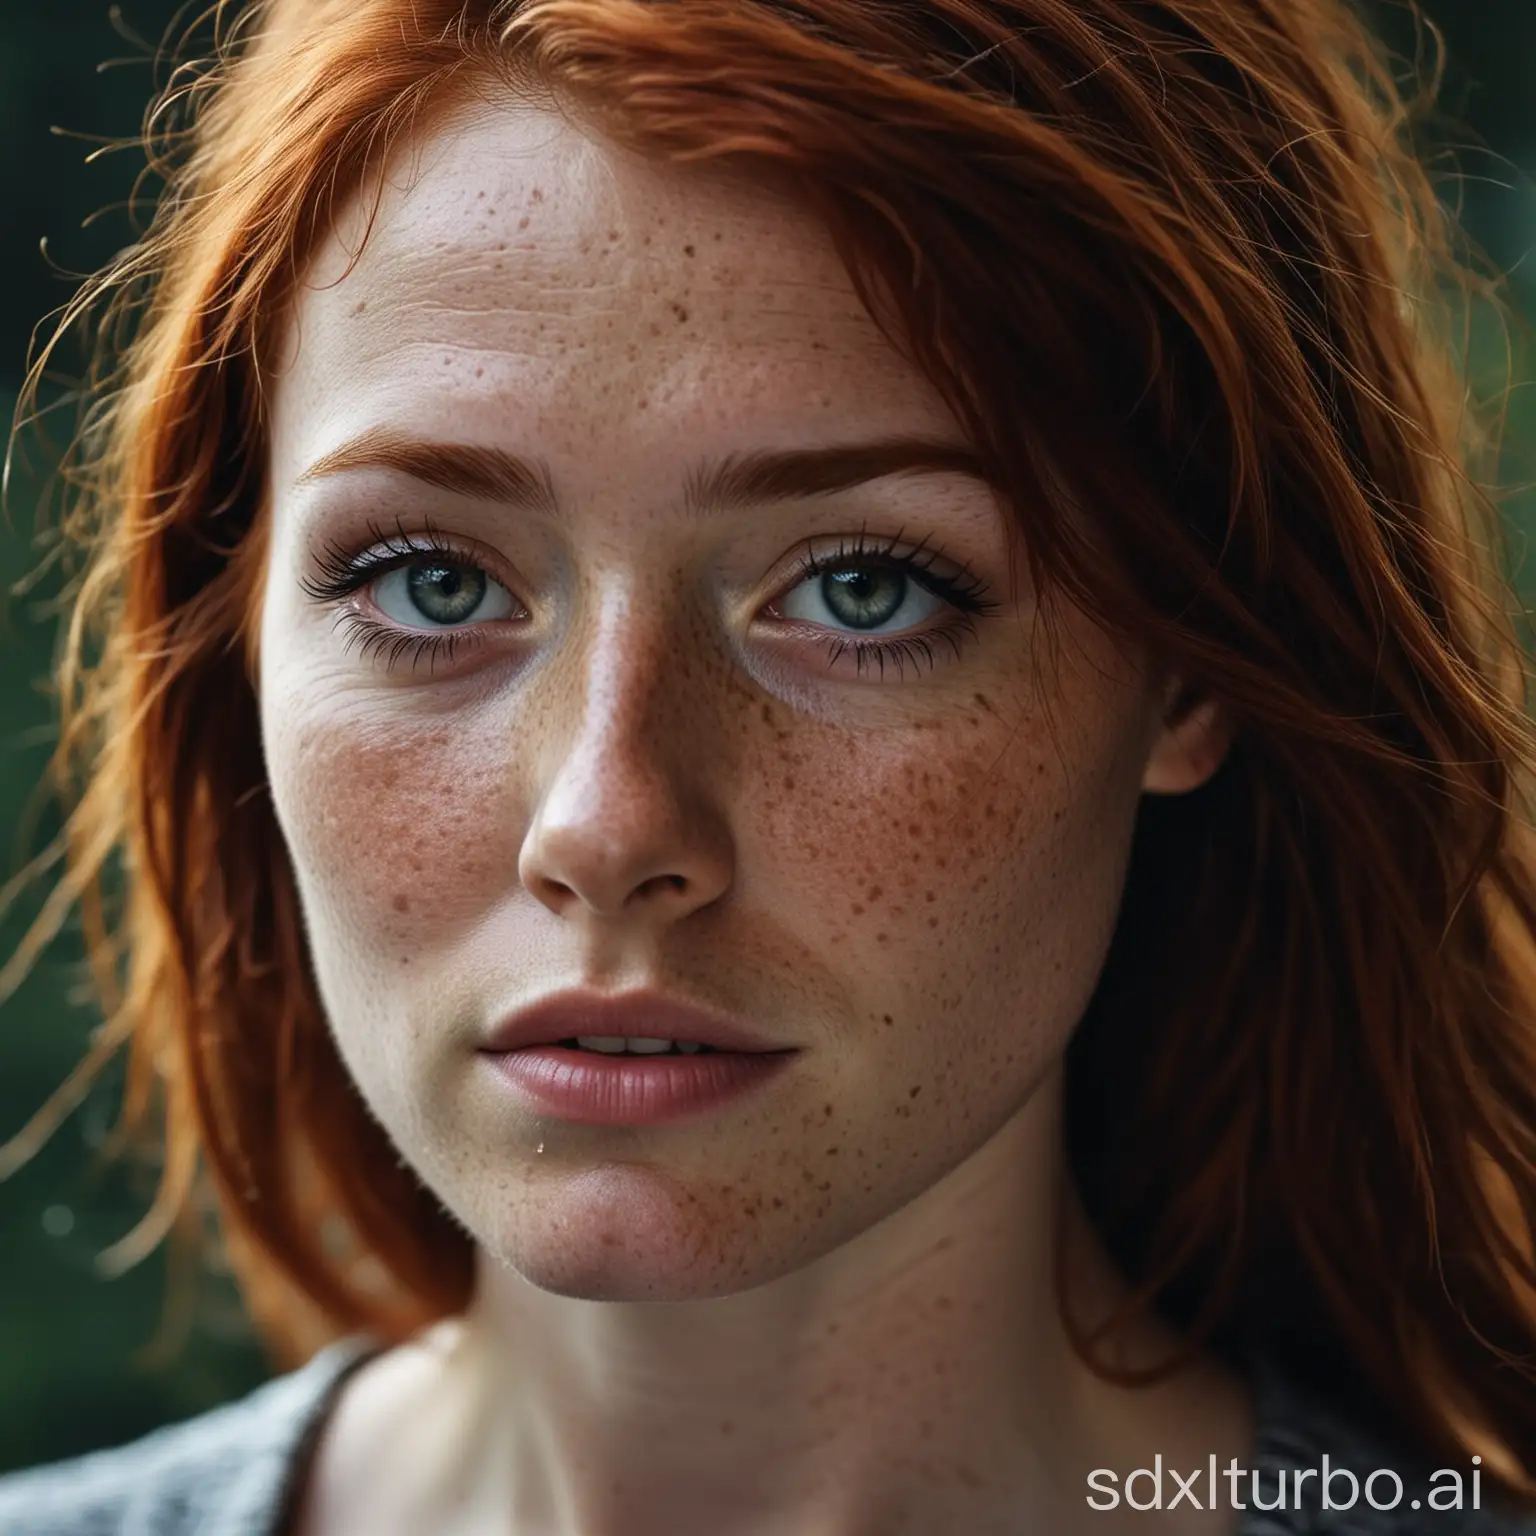 Medium shot, dark photo, freckled face, suggestive redhead Medium shot